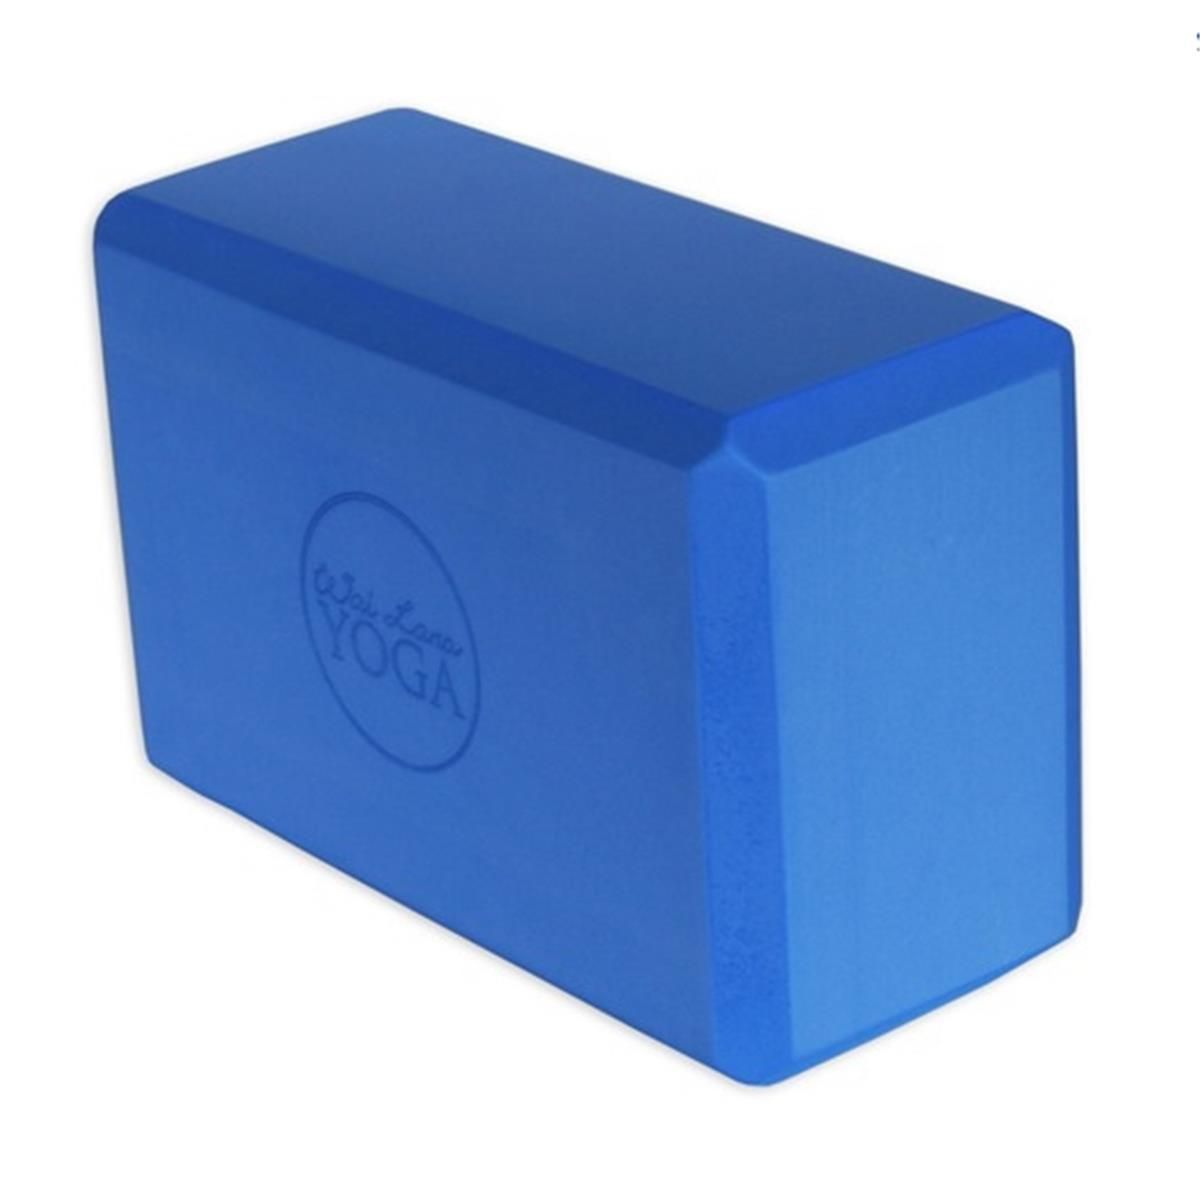 Image for Higherhealth 4 in. Foam Yoga Block - Blue at Kohl's.